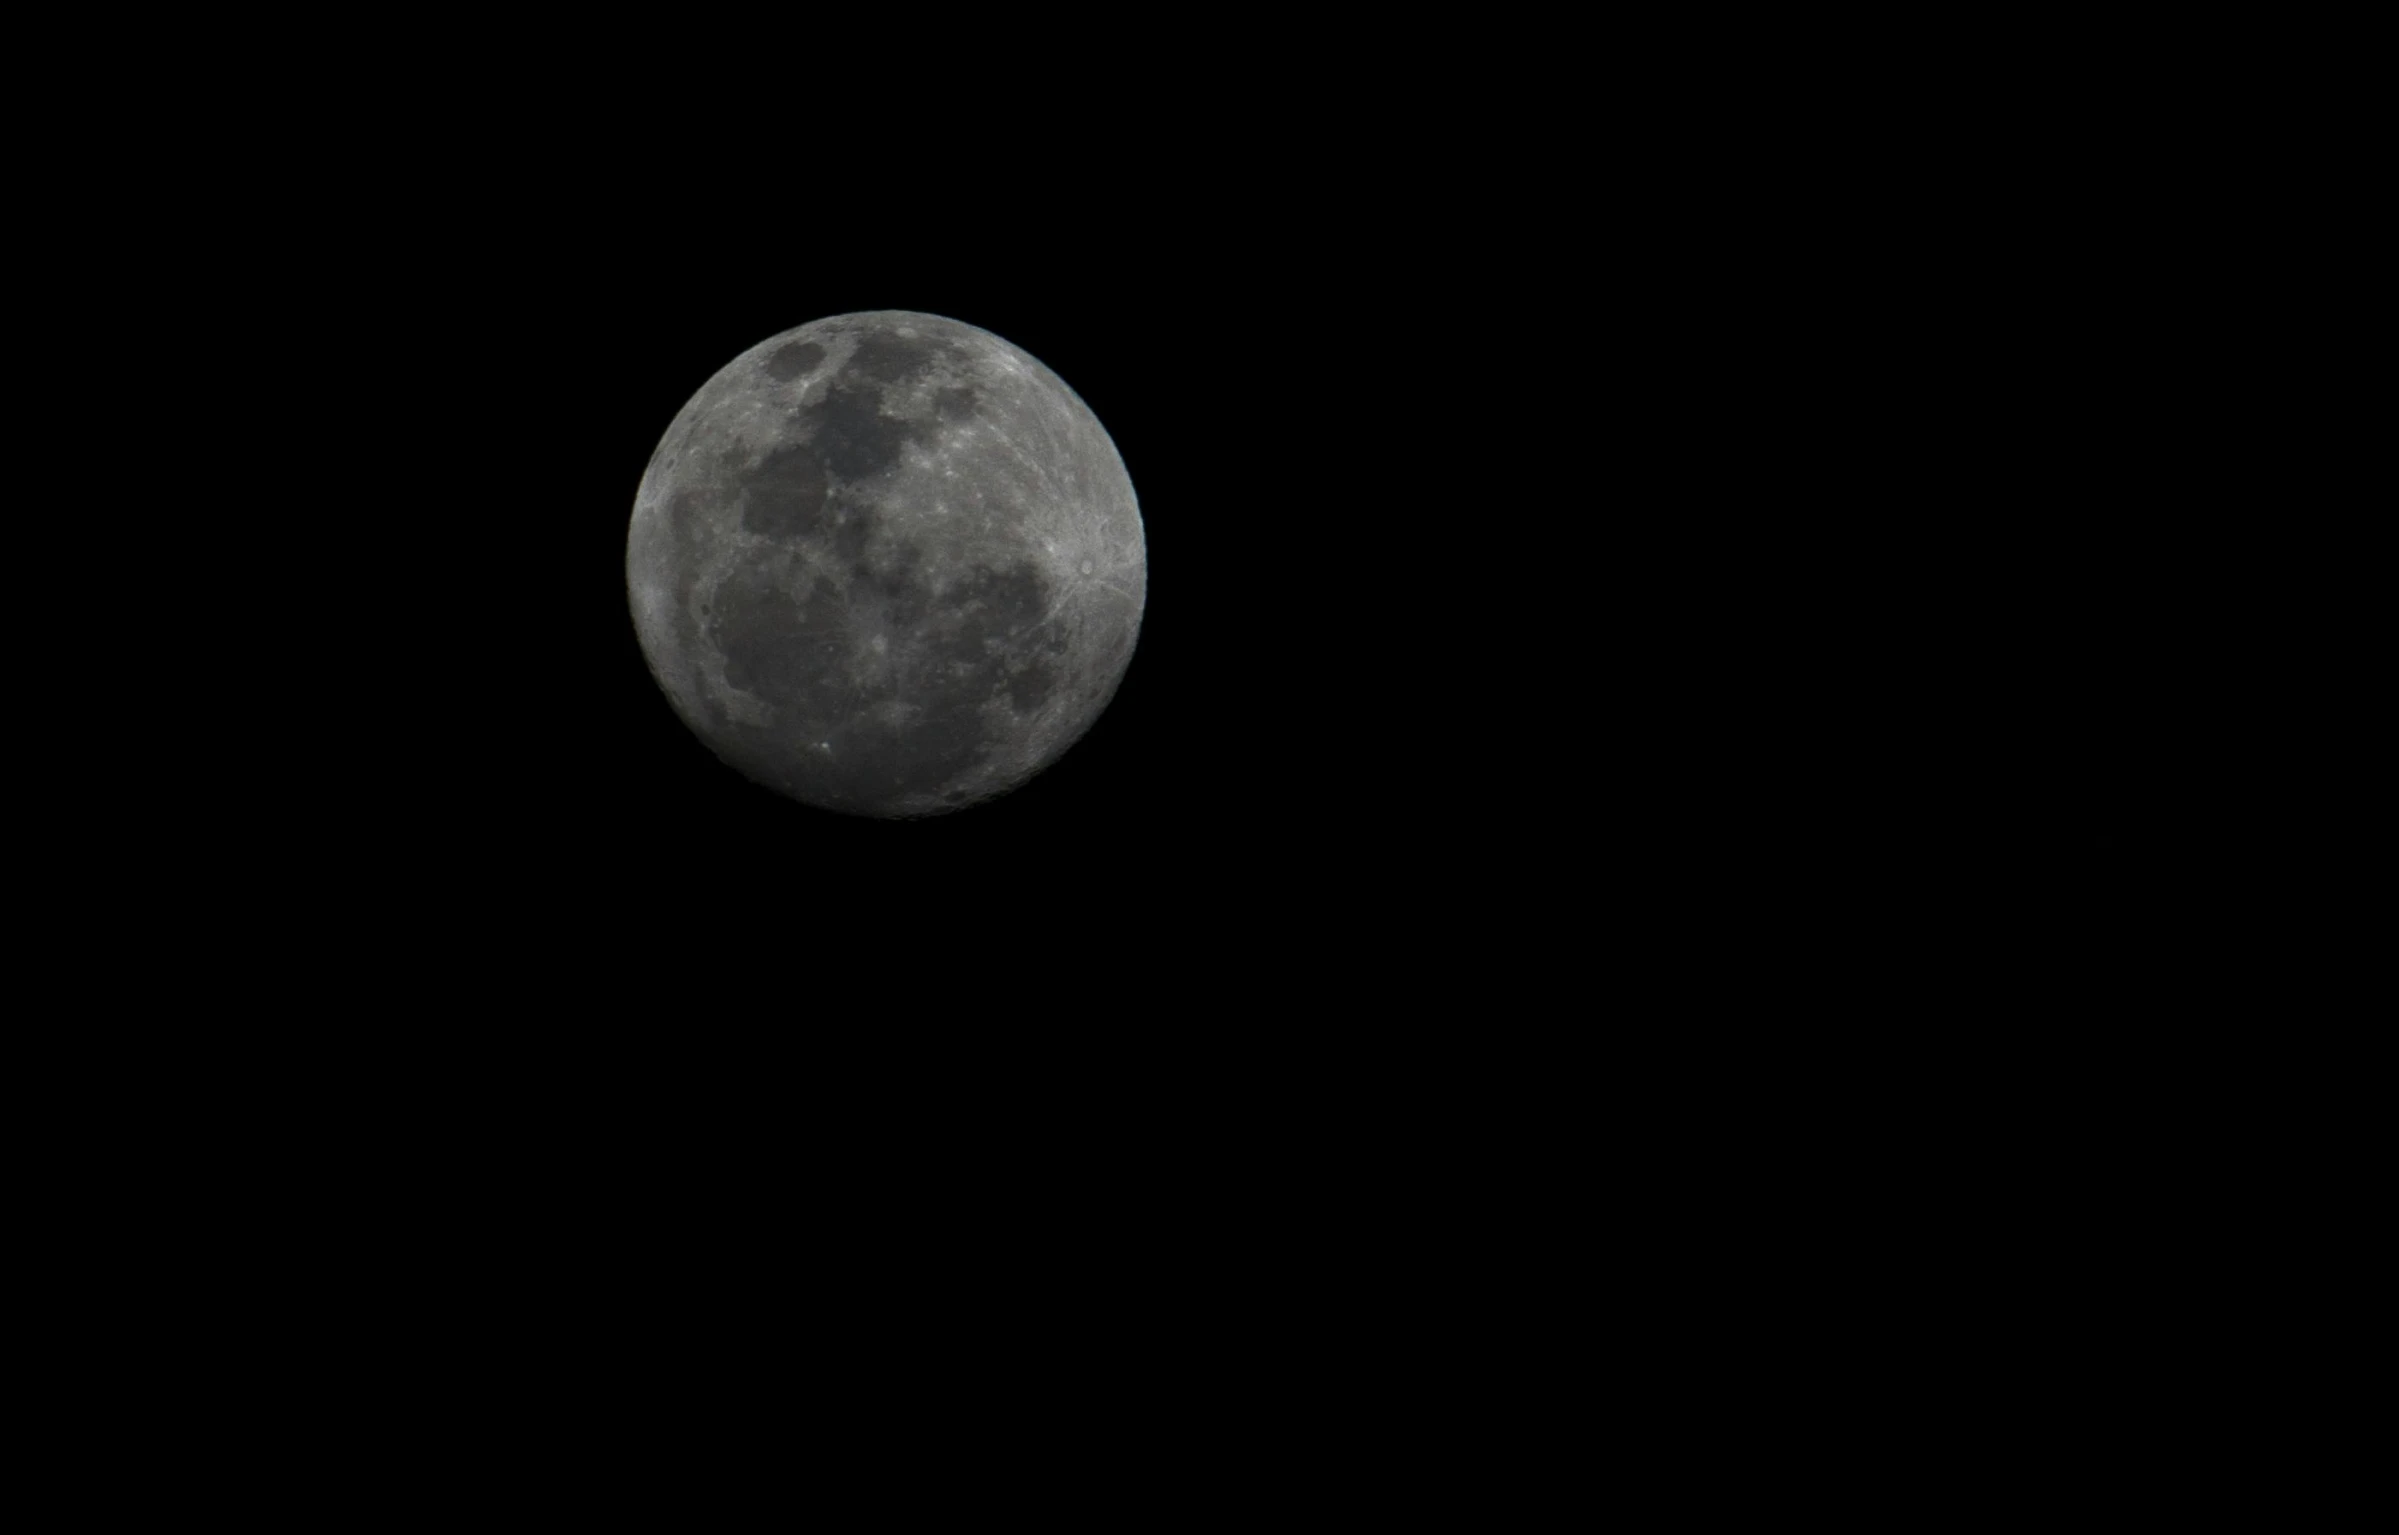 the moon is seen in a black sky